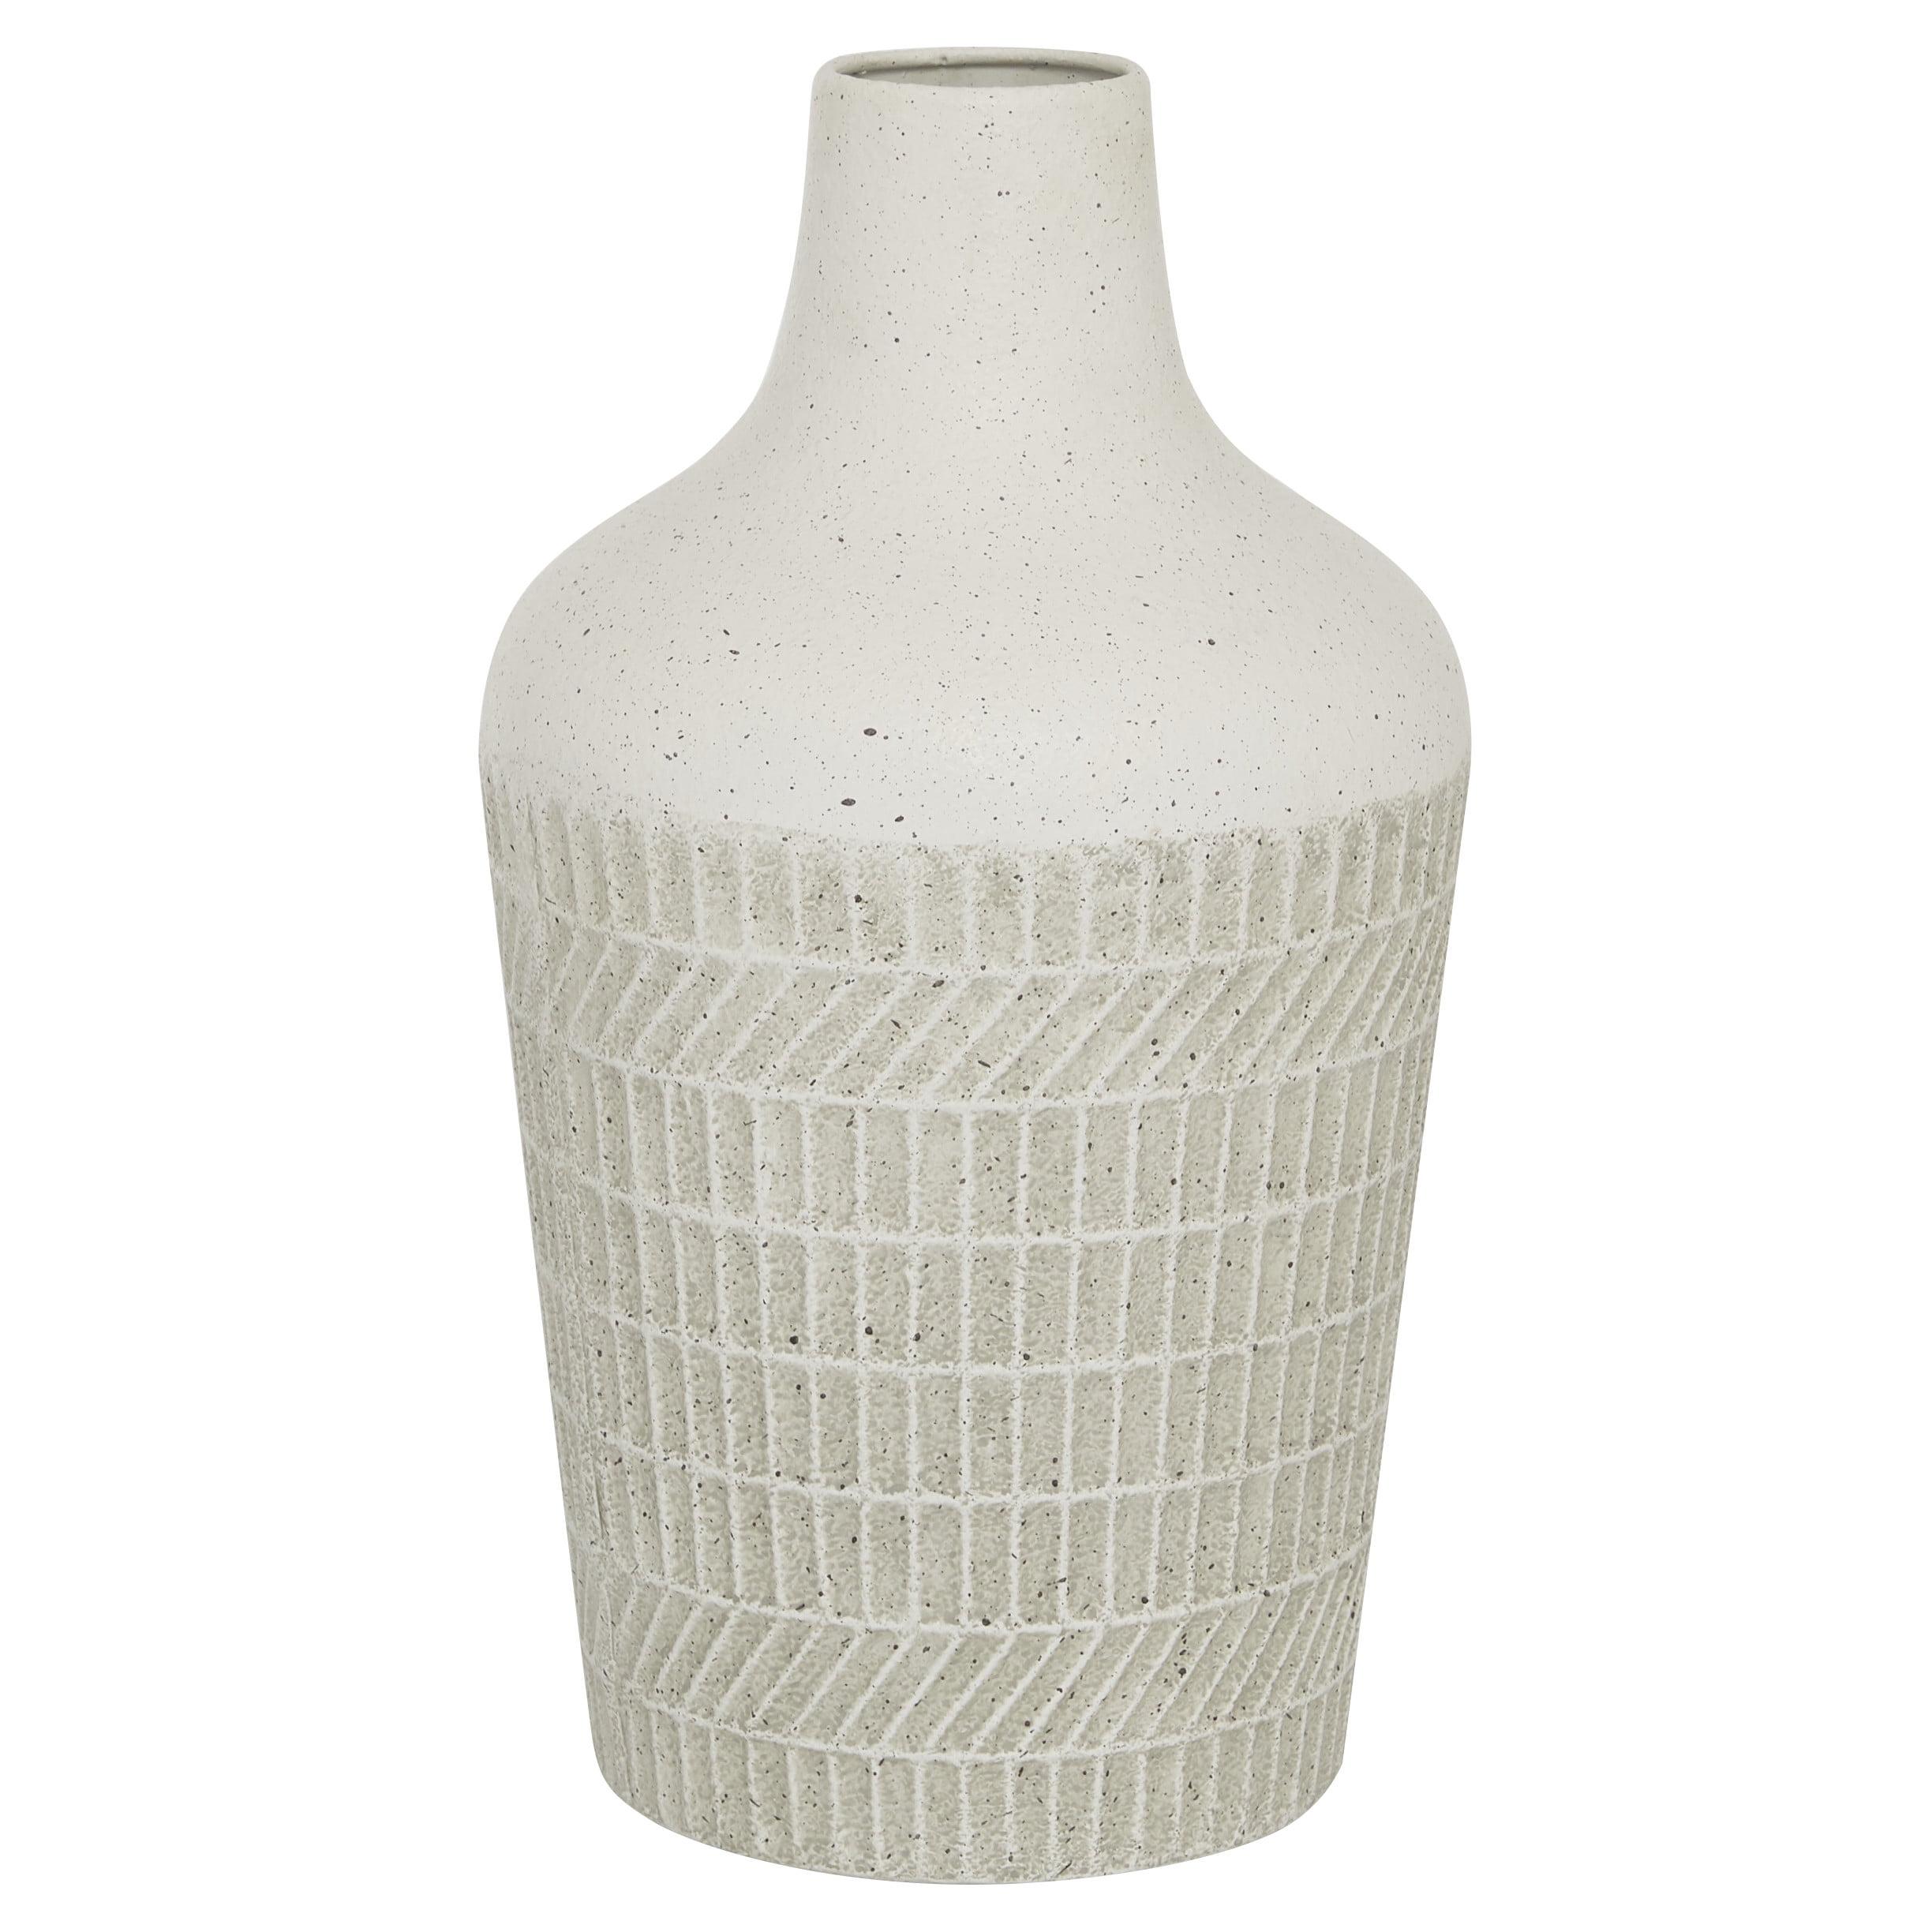 Eggshell White Textured Metal Decorative Table Vase